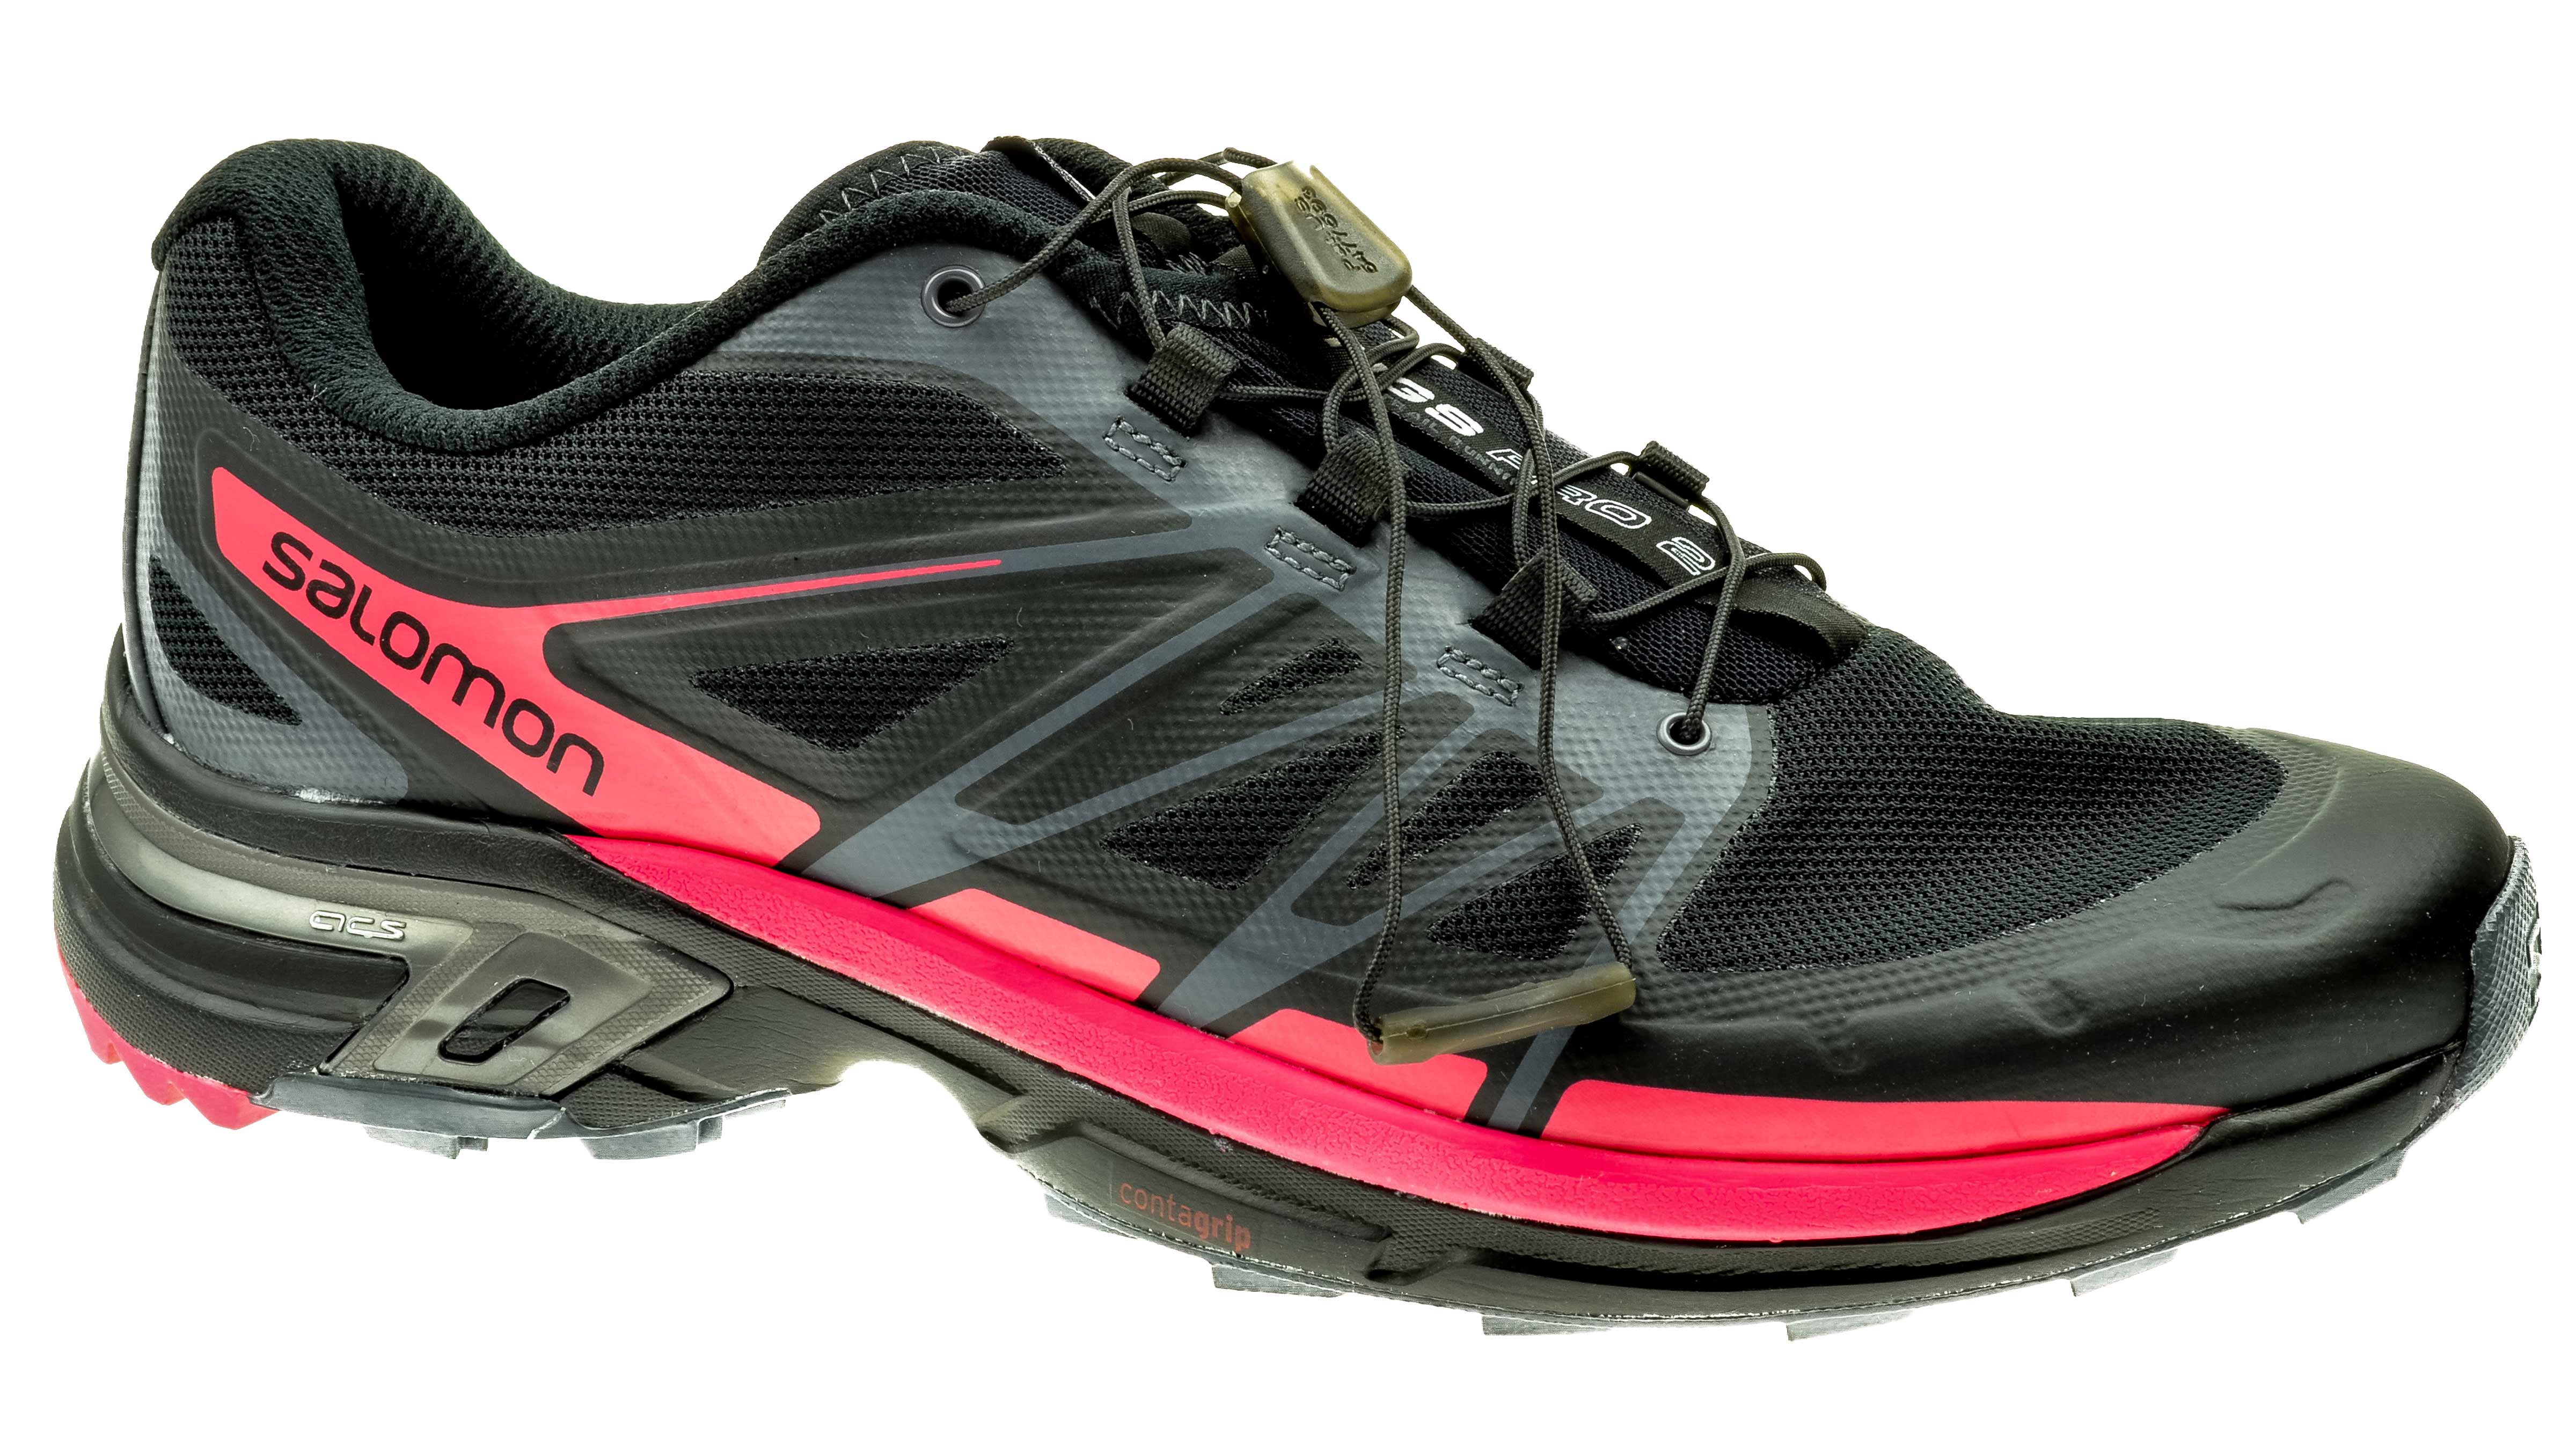 salomon wing pro 2 running shoes for women black dark pink